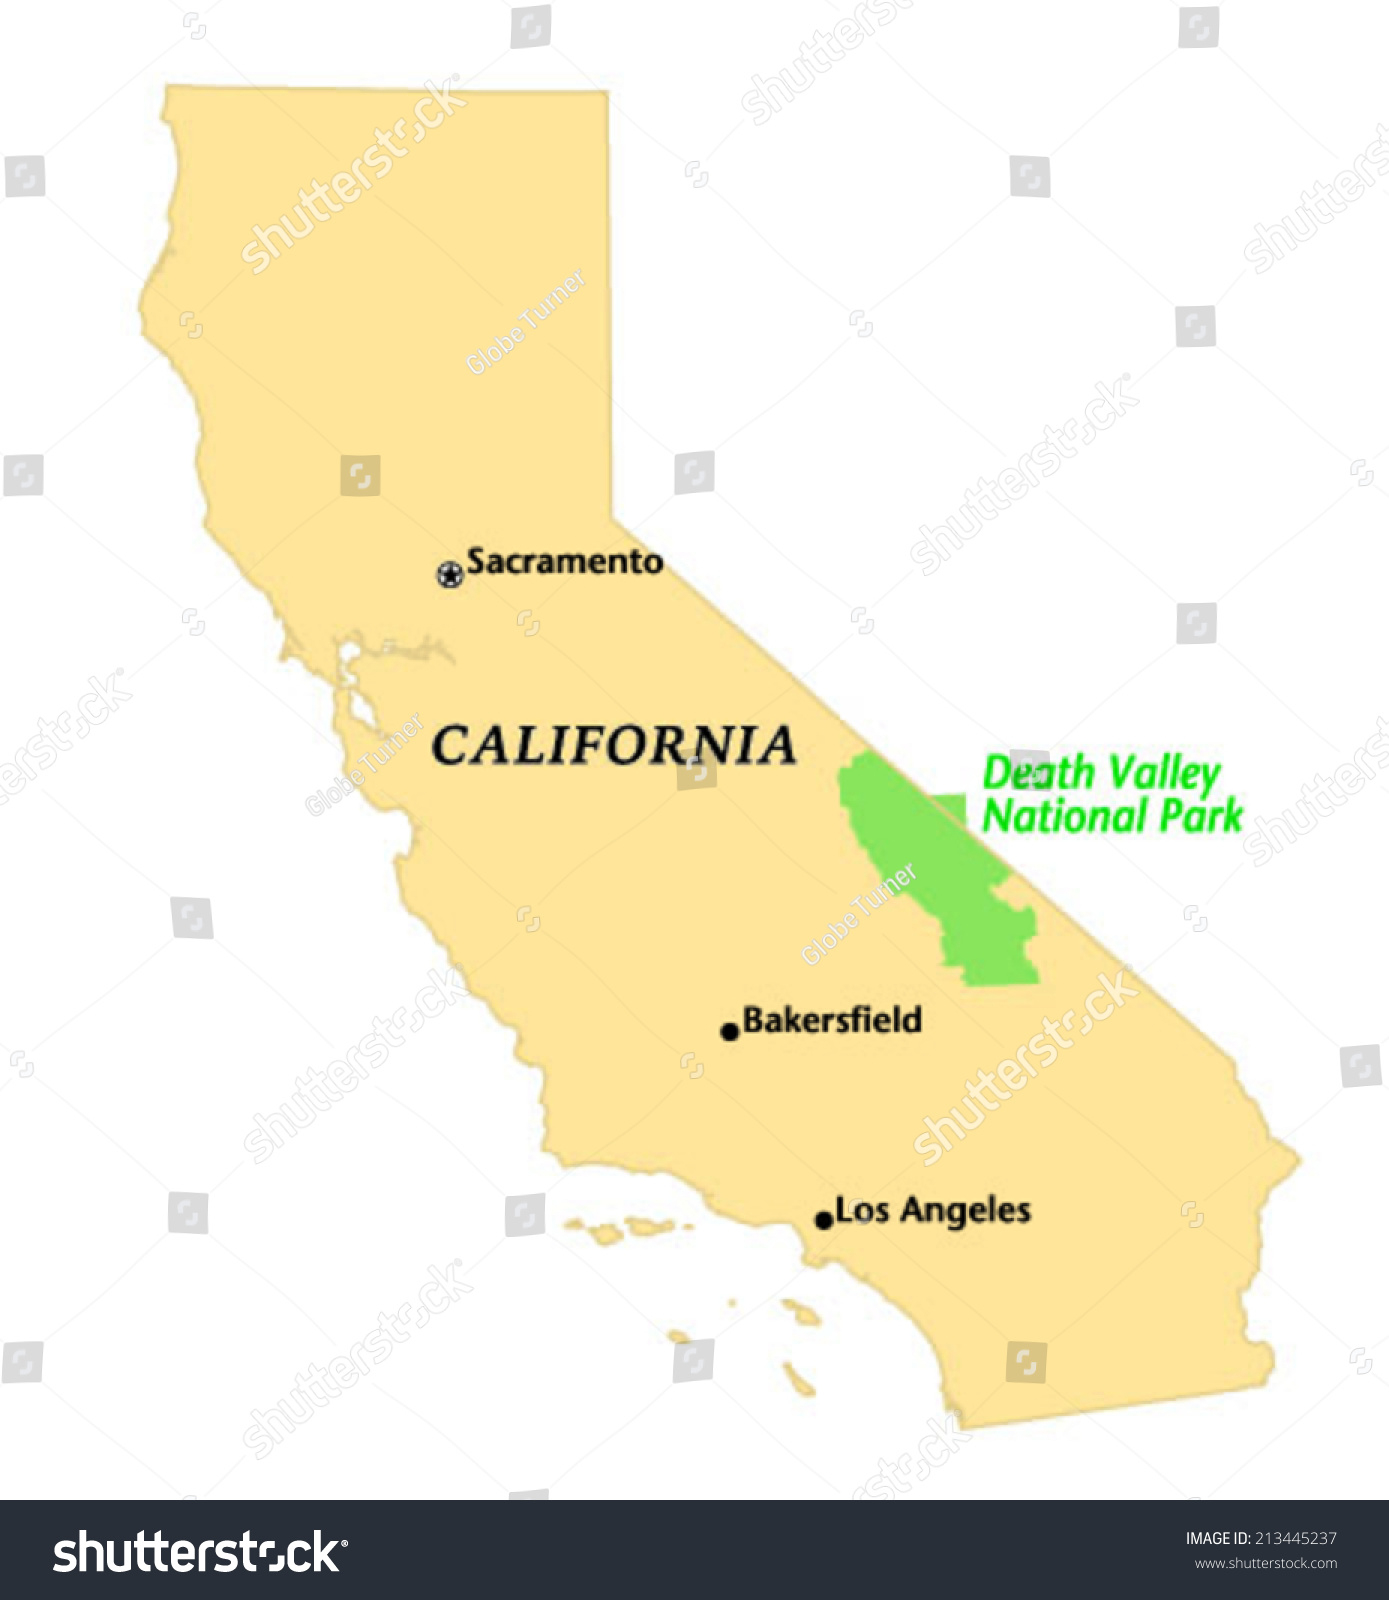 Death Valley National Park Locat Map California Where Is Death - Death Valley California Map